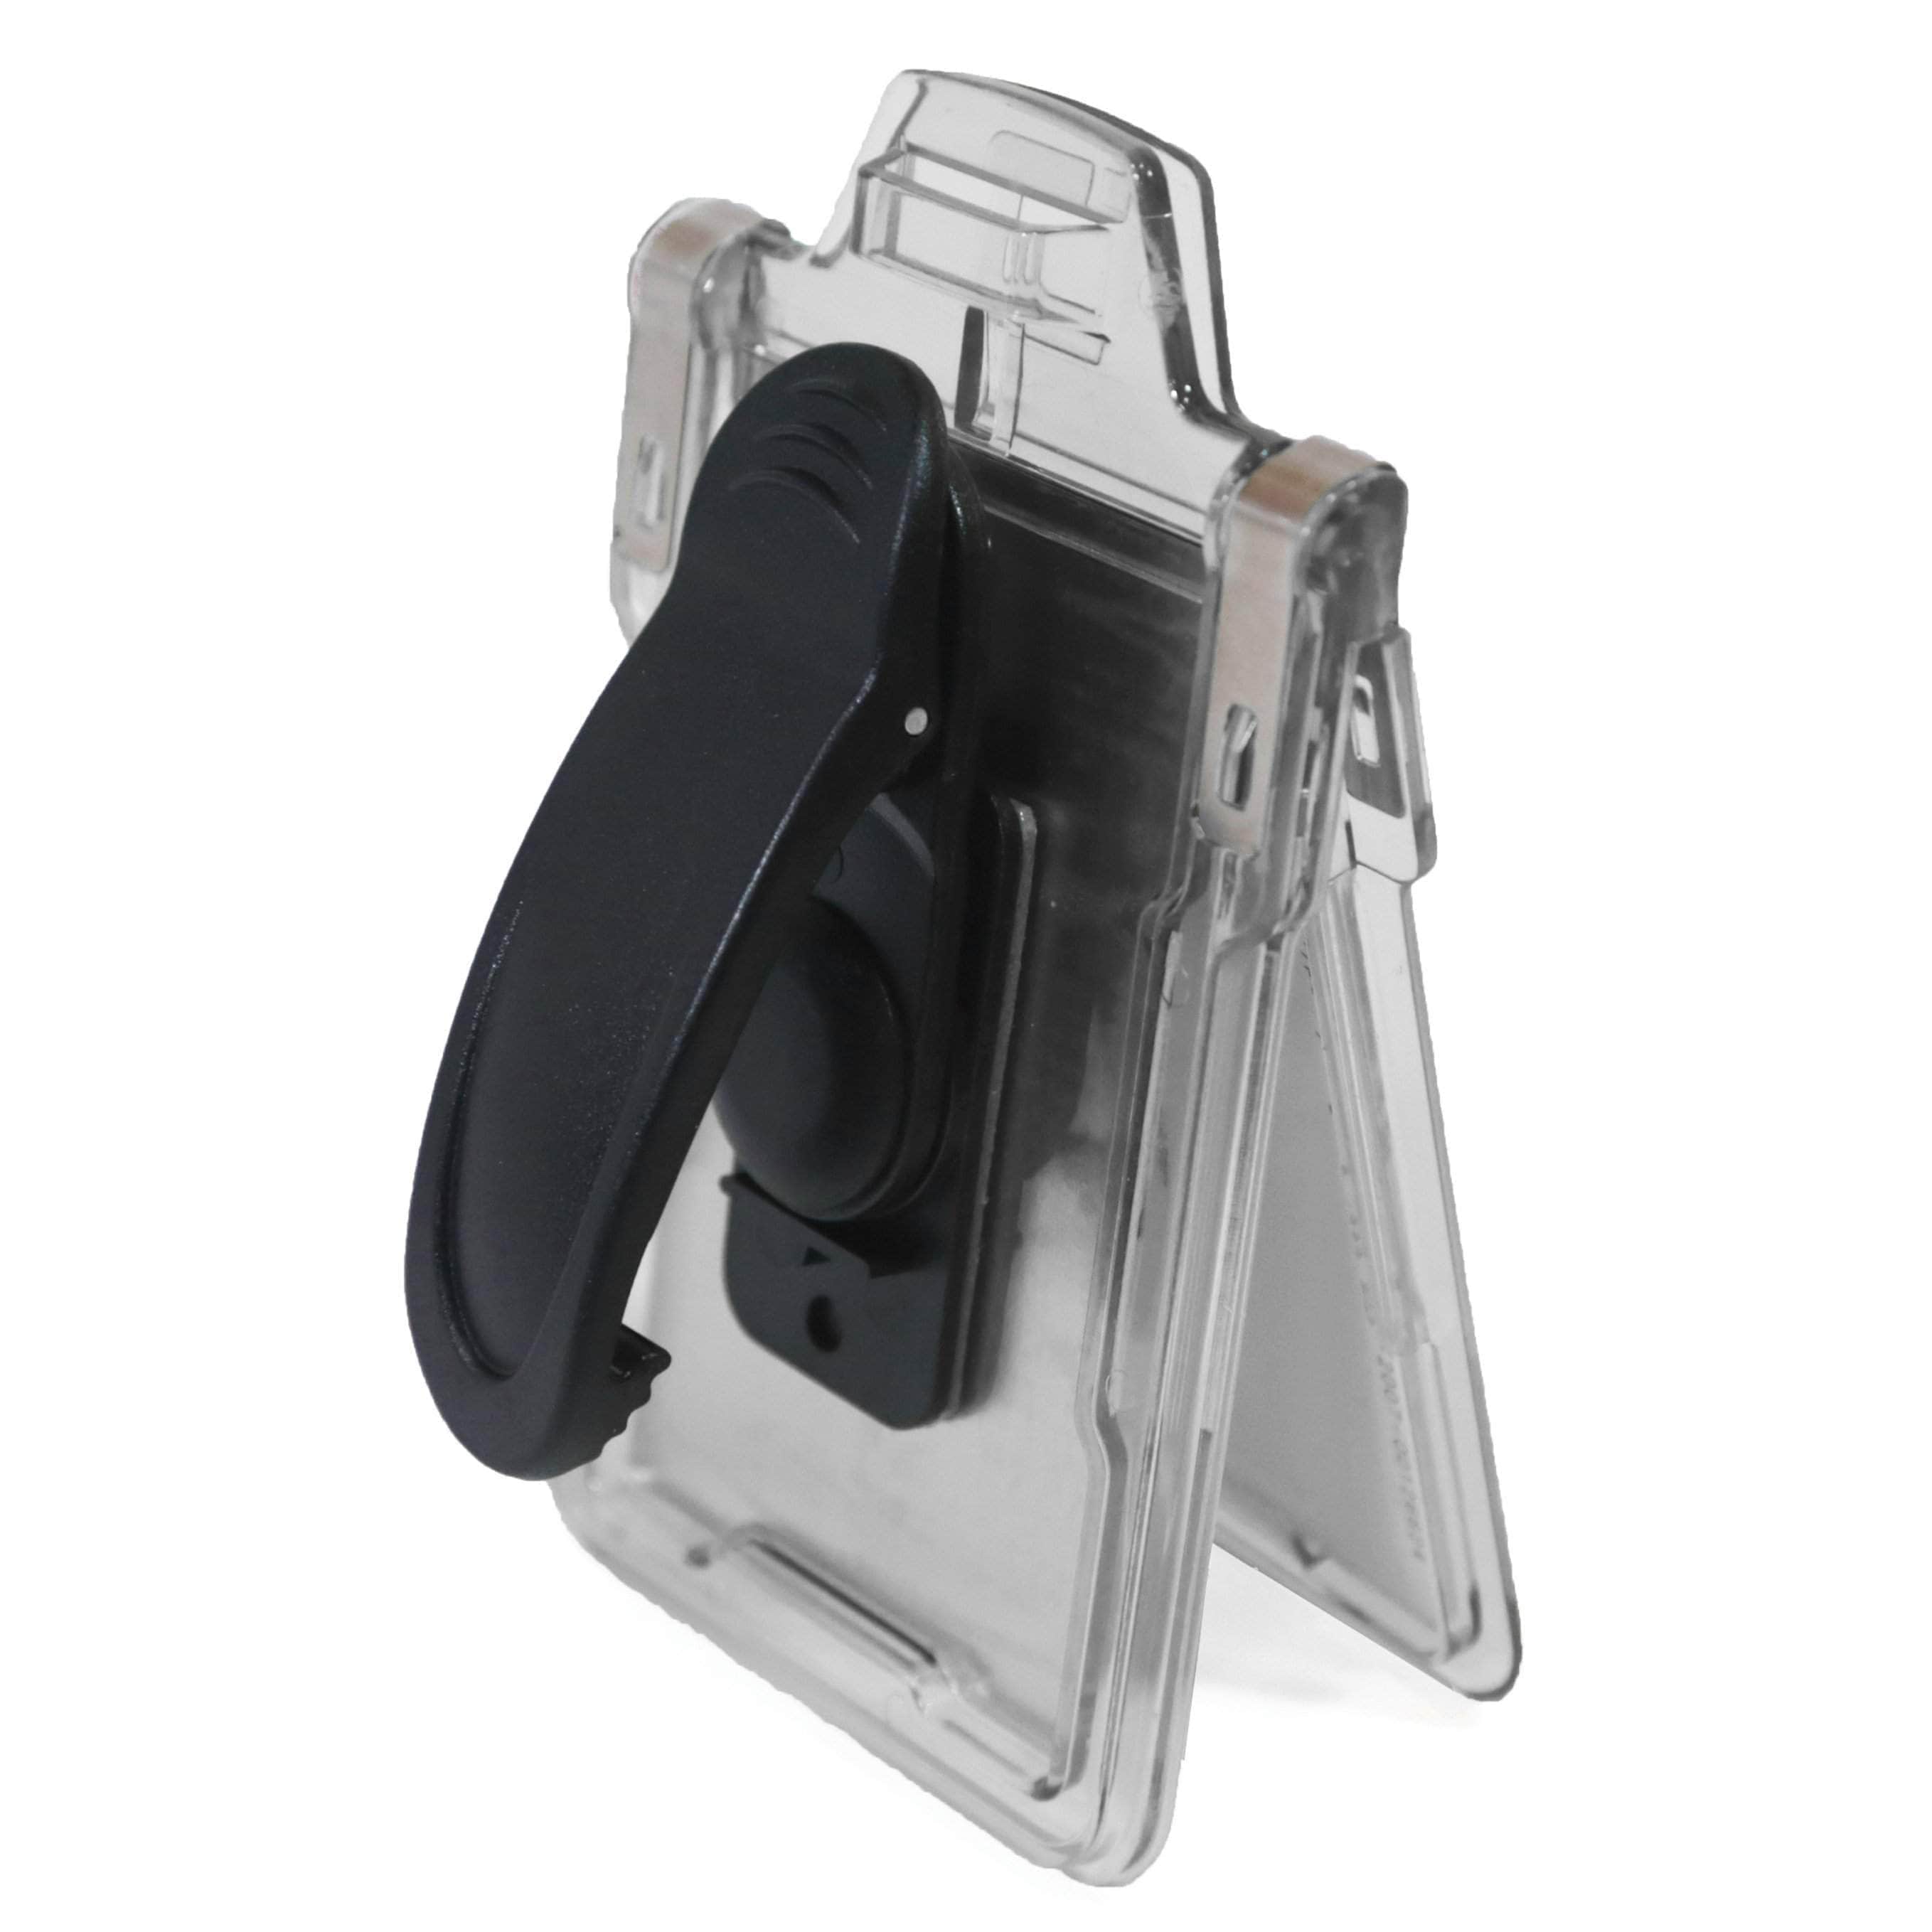 ID Stronghold Badgeholder Clear Secure Badge Holder Classic Vertical 1 Card Holder With Belt Clip